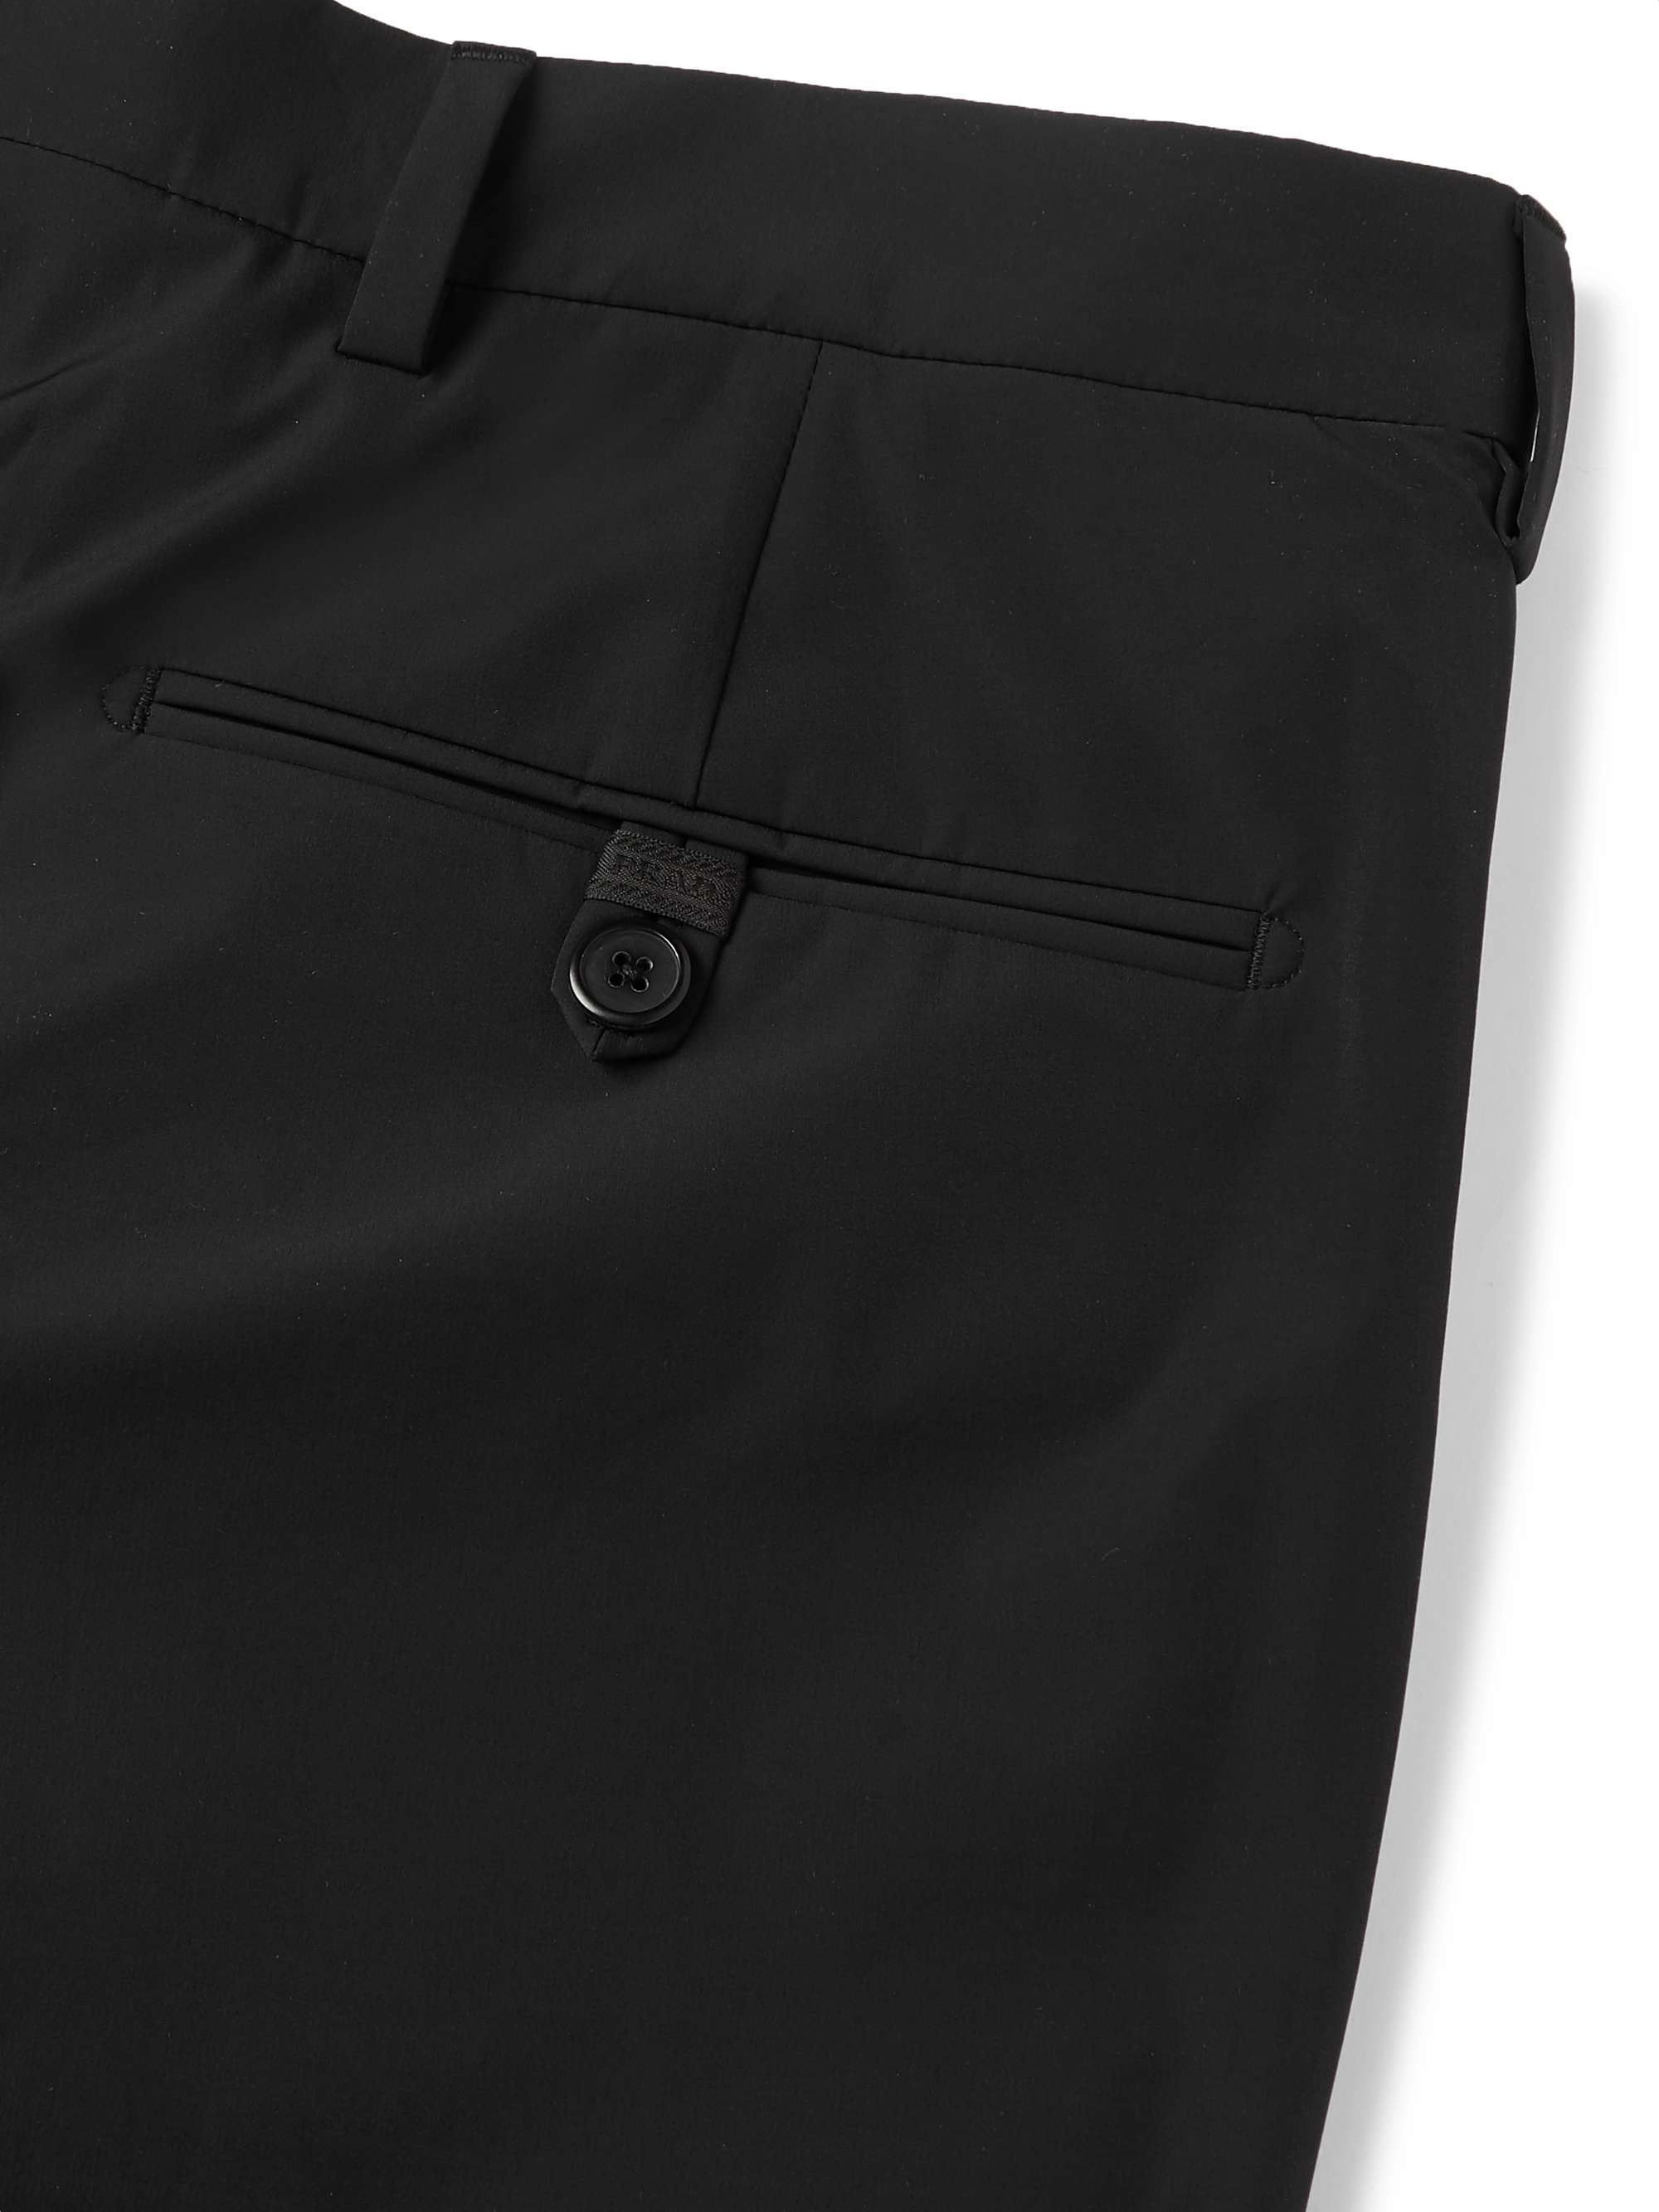 PRADA Black Slim-Fit Stretch-Nylon Trousers